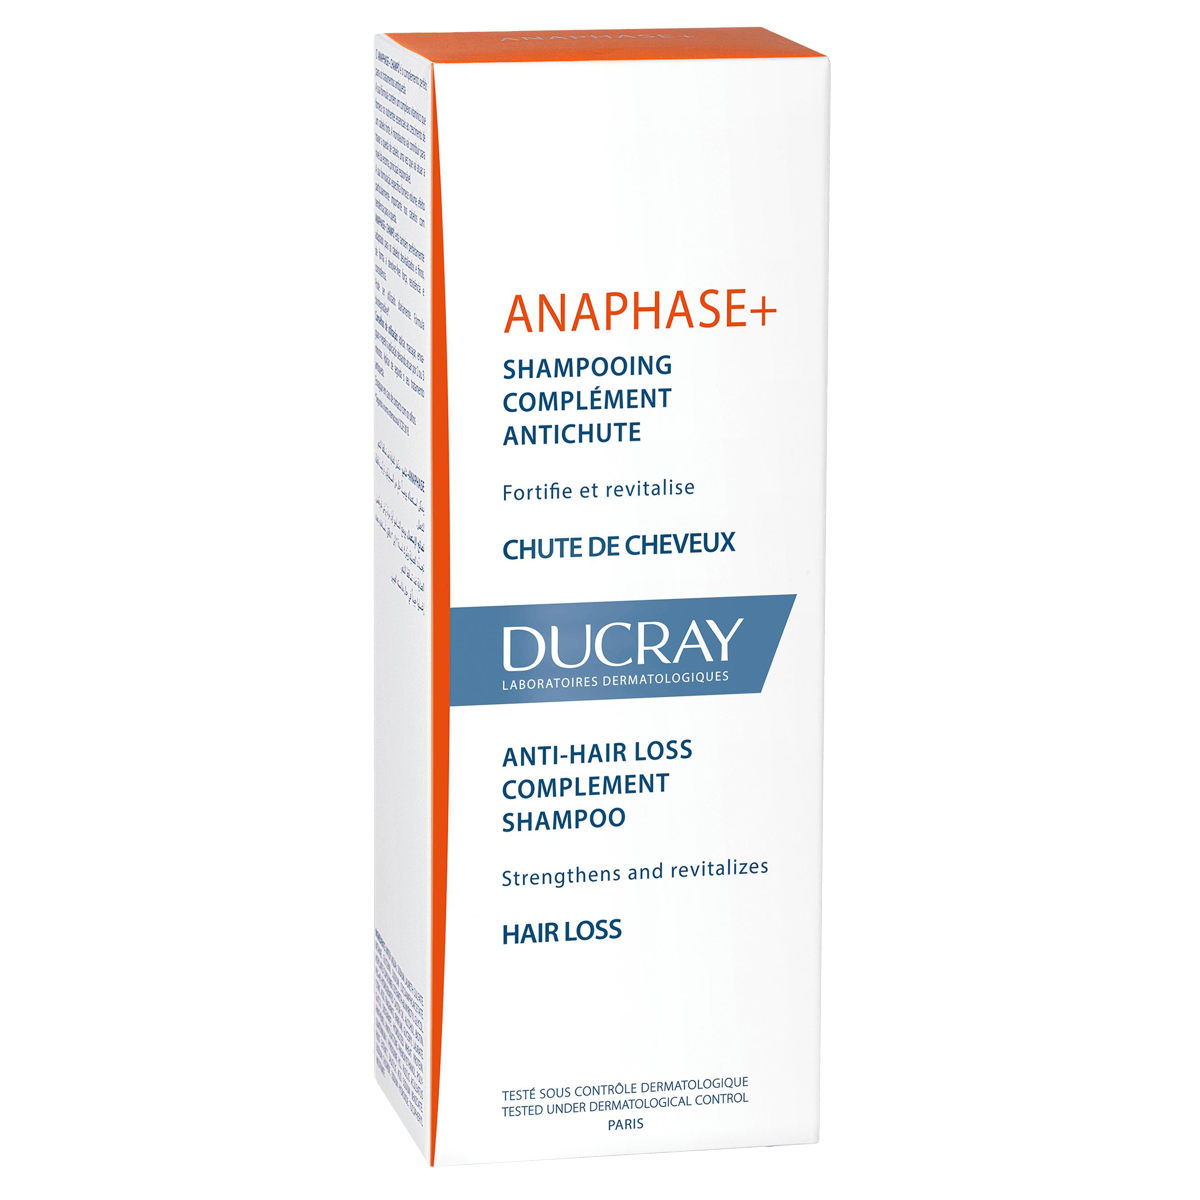 Ducray Anaphase+ Shampoo Haarausfall Tube 200 ml